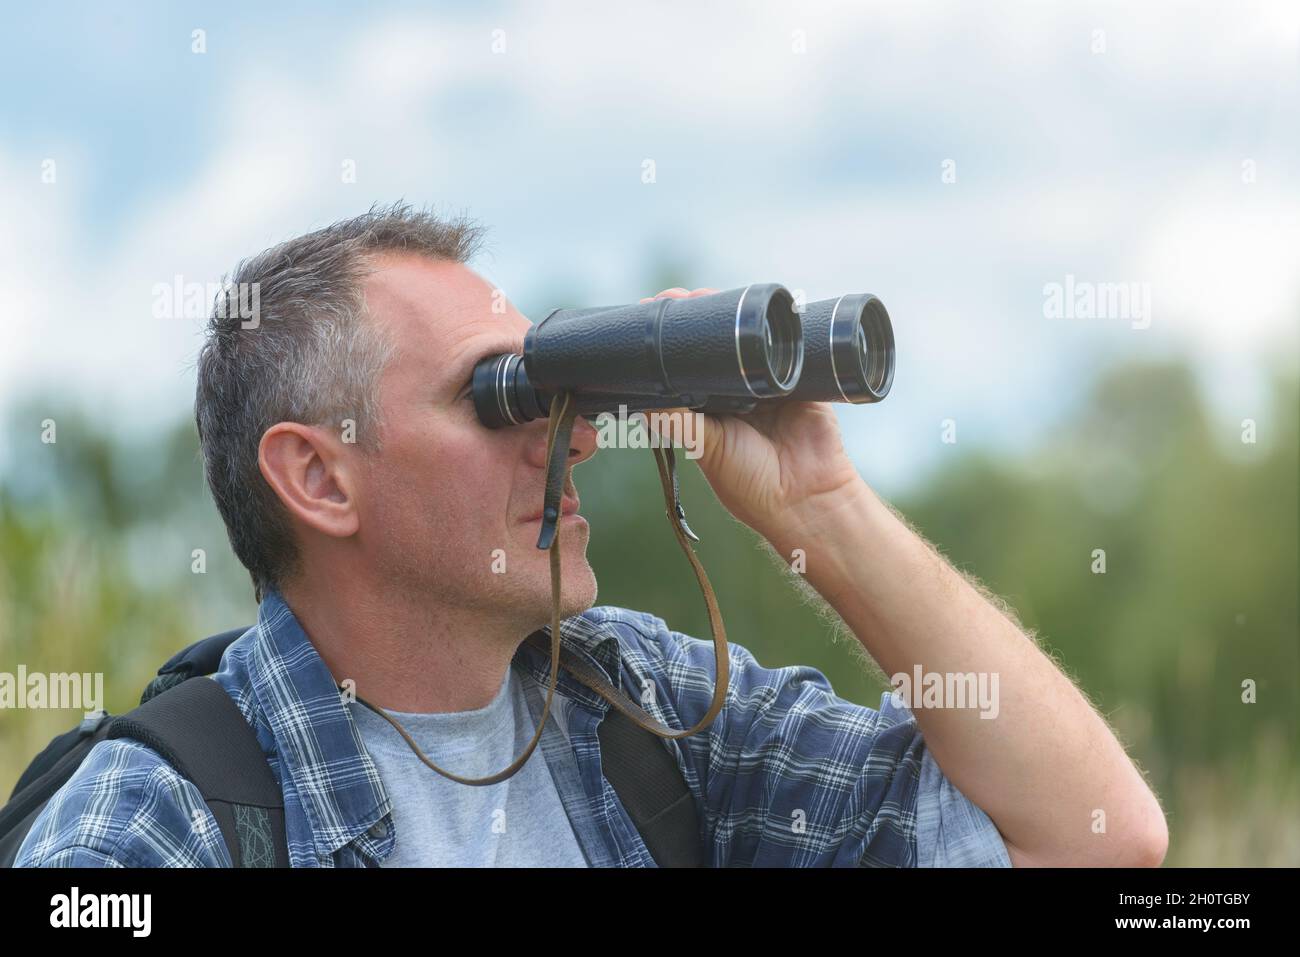 Close up of a man looking through binoculars, outdoors. Stock Photo